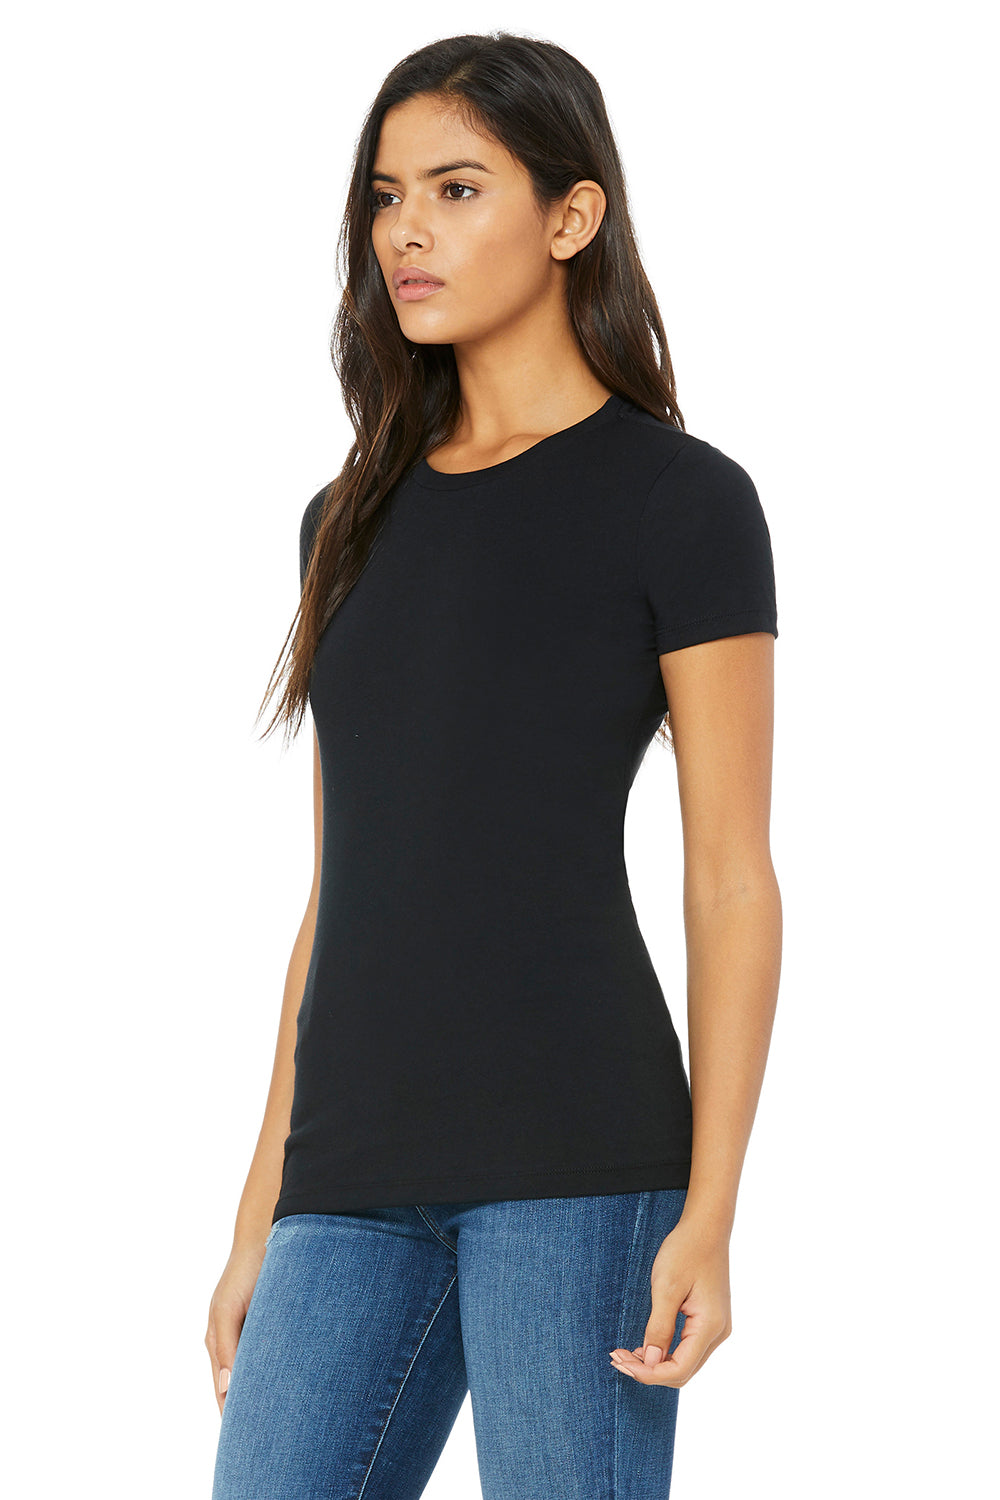 Bella + Canvas BC6004/6004 Womens The Favorite Short Sleeve Crewneck T-Shirt Solid Black Model 3Q